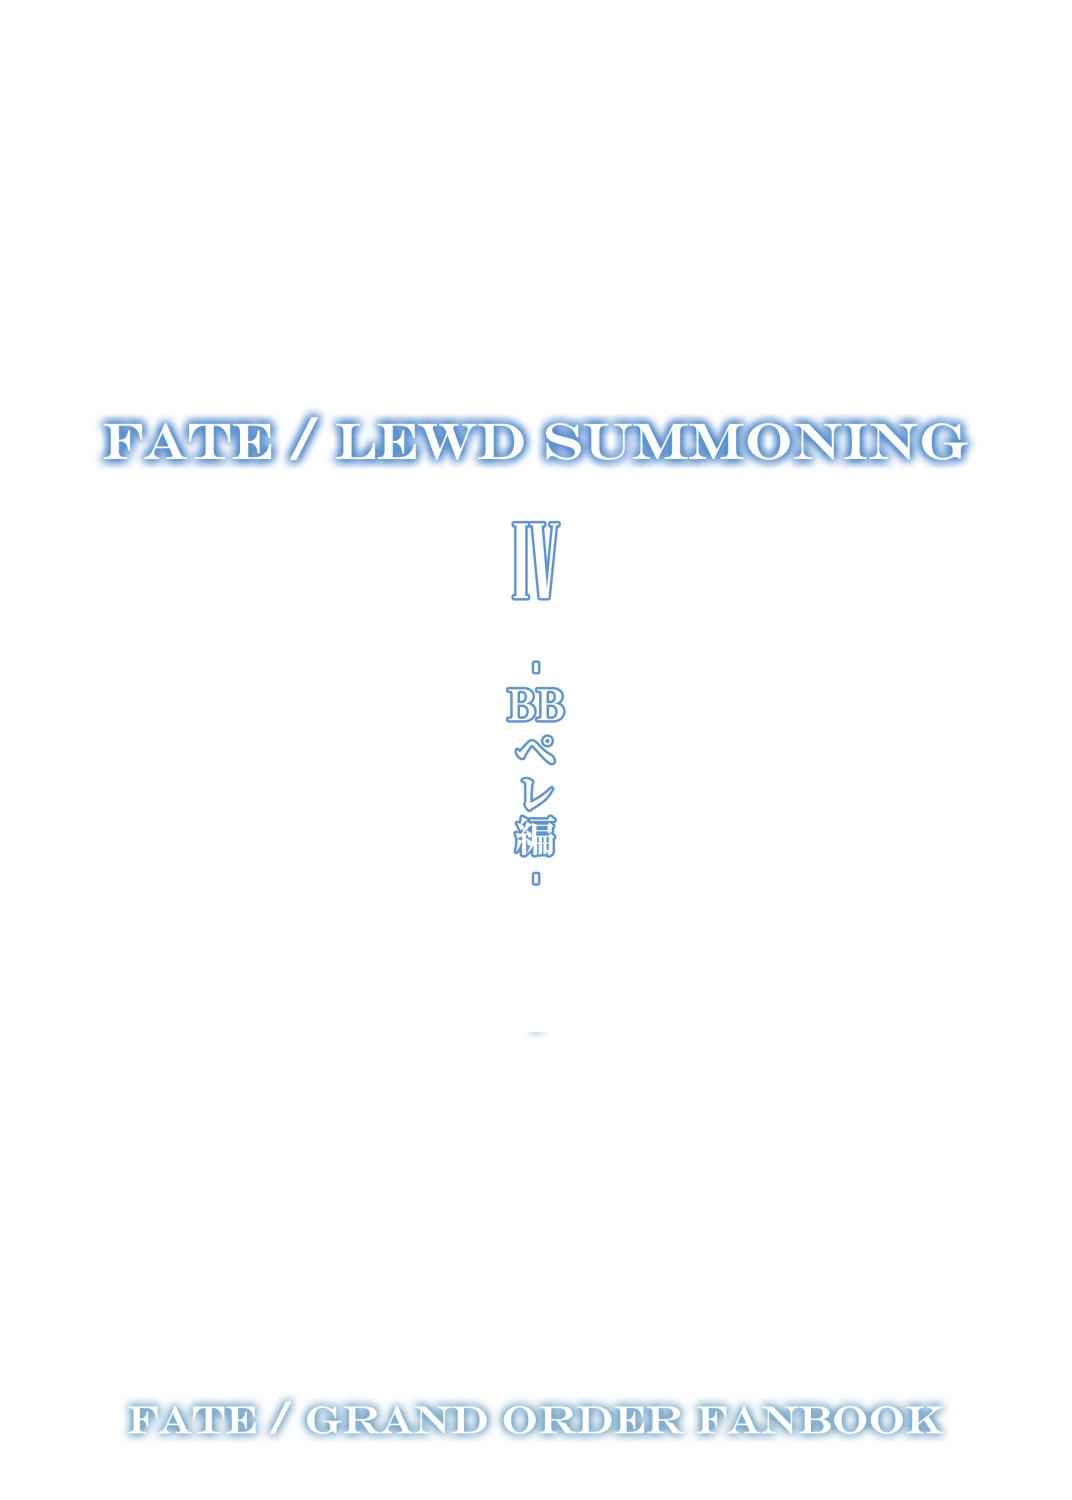 Fate/Lewd Summoning 4 19